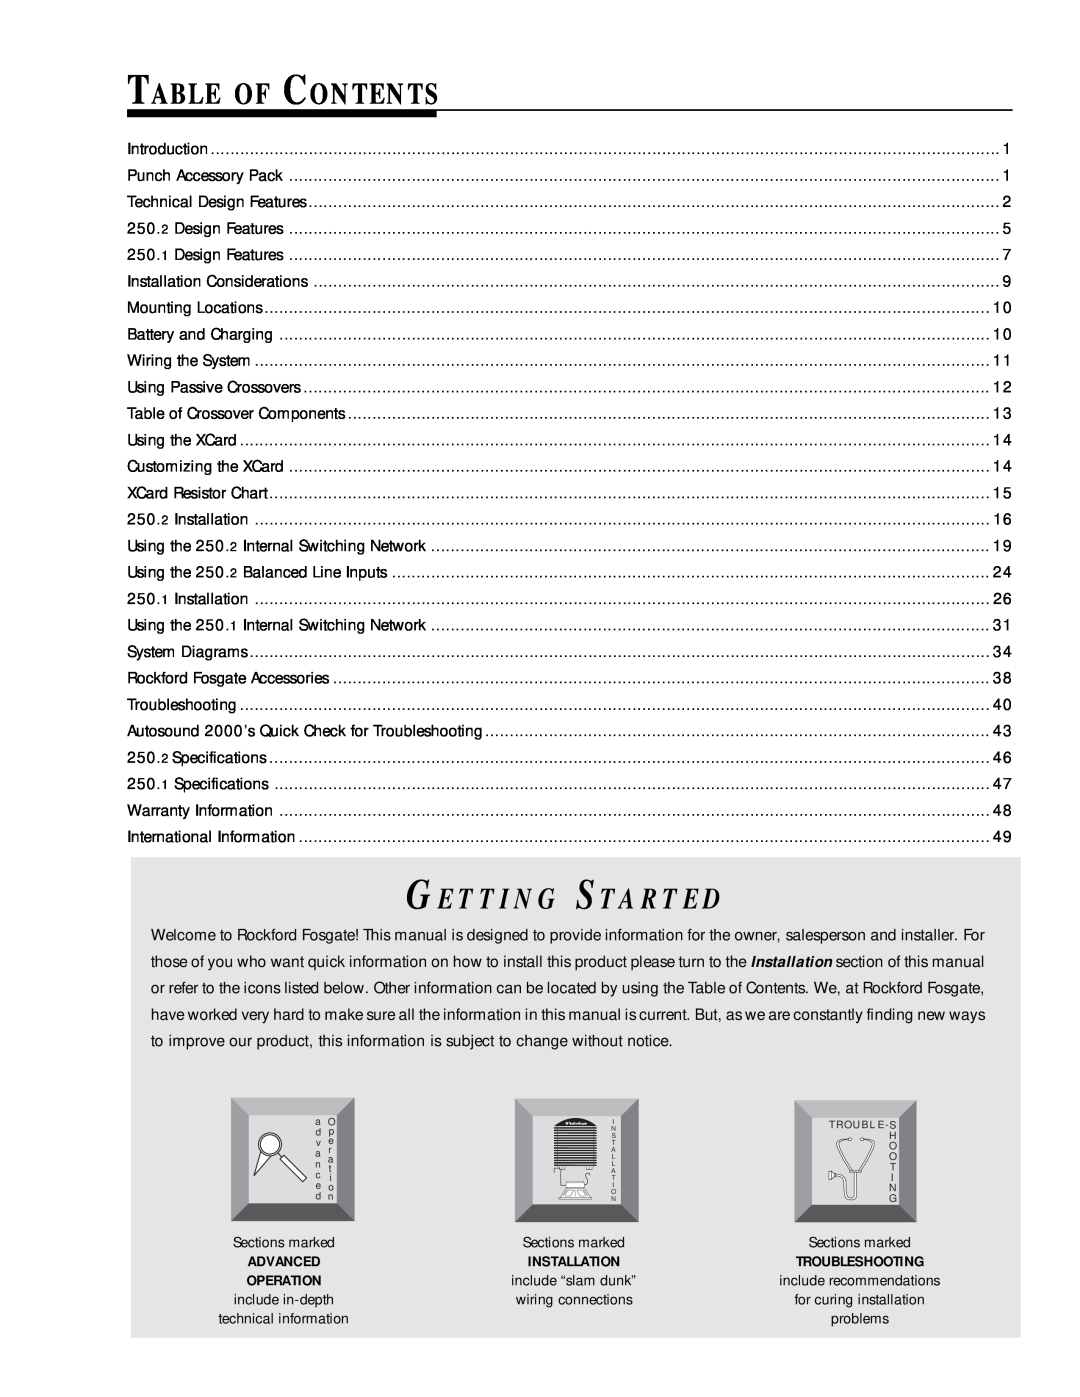 Rockford Fosgate 250.2 manual Table Of Contents, G E T T I N G S Ta R T E D 